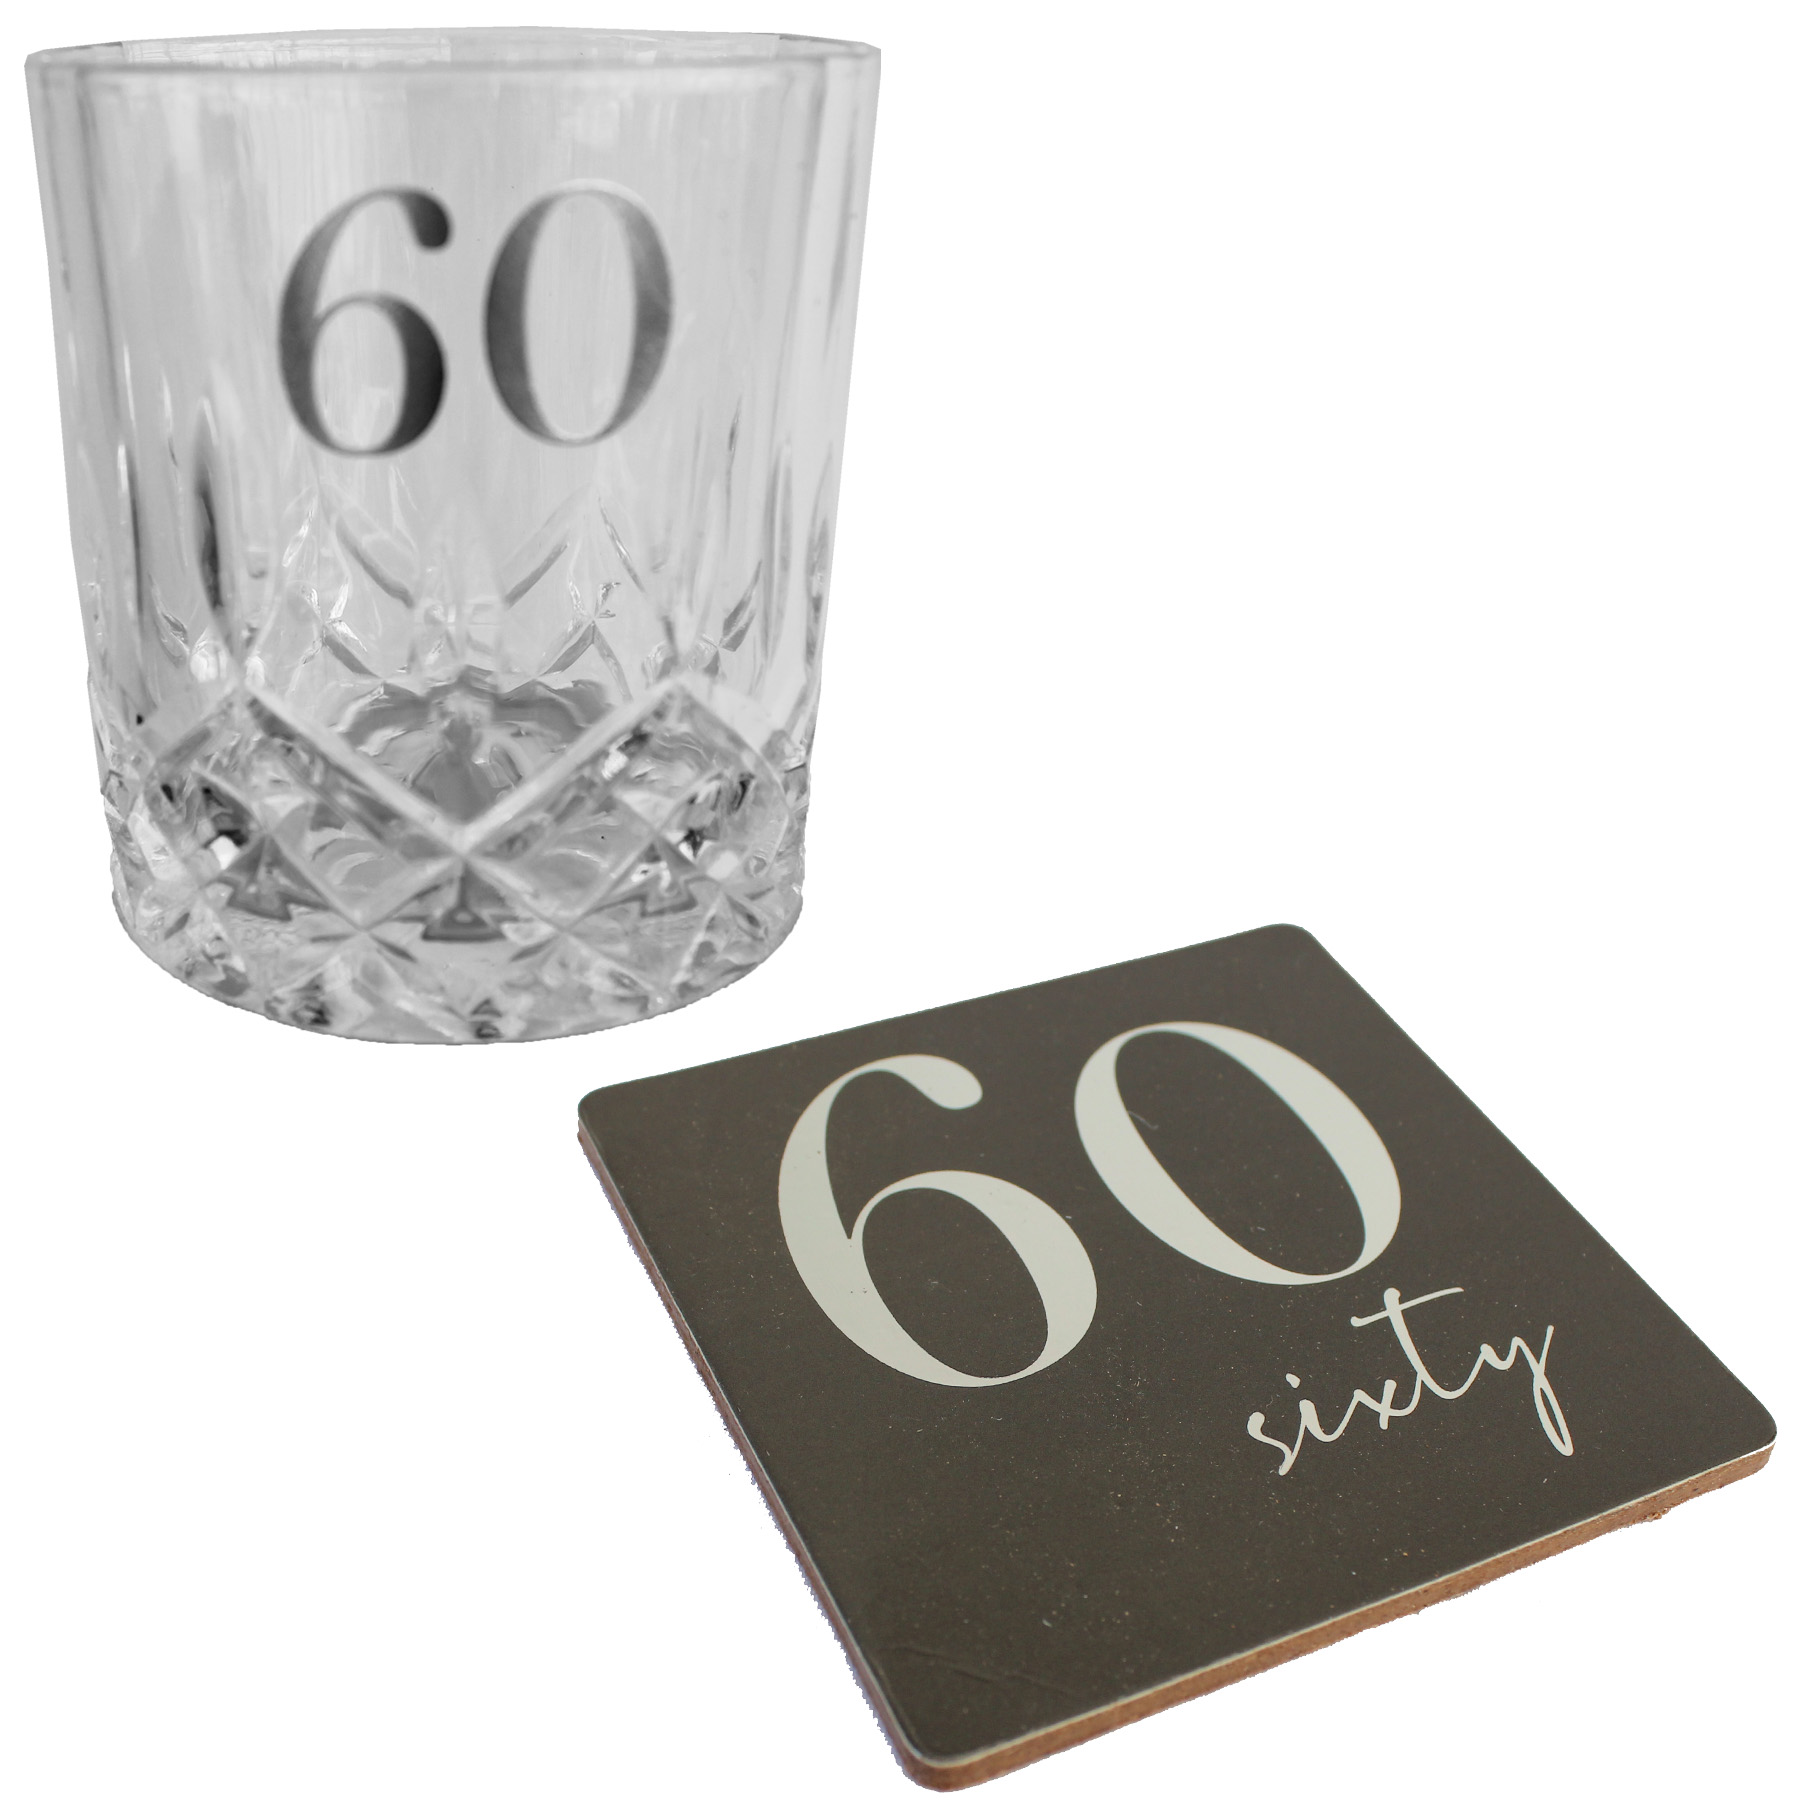 Cut Glass Whisky Tumbler and Coaster Set Gift Box - 60th Birthday